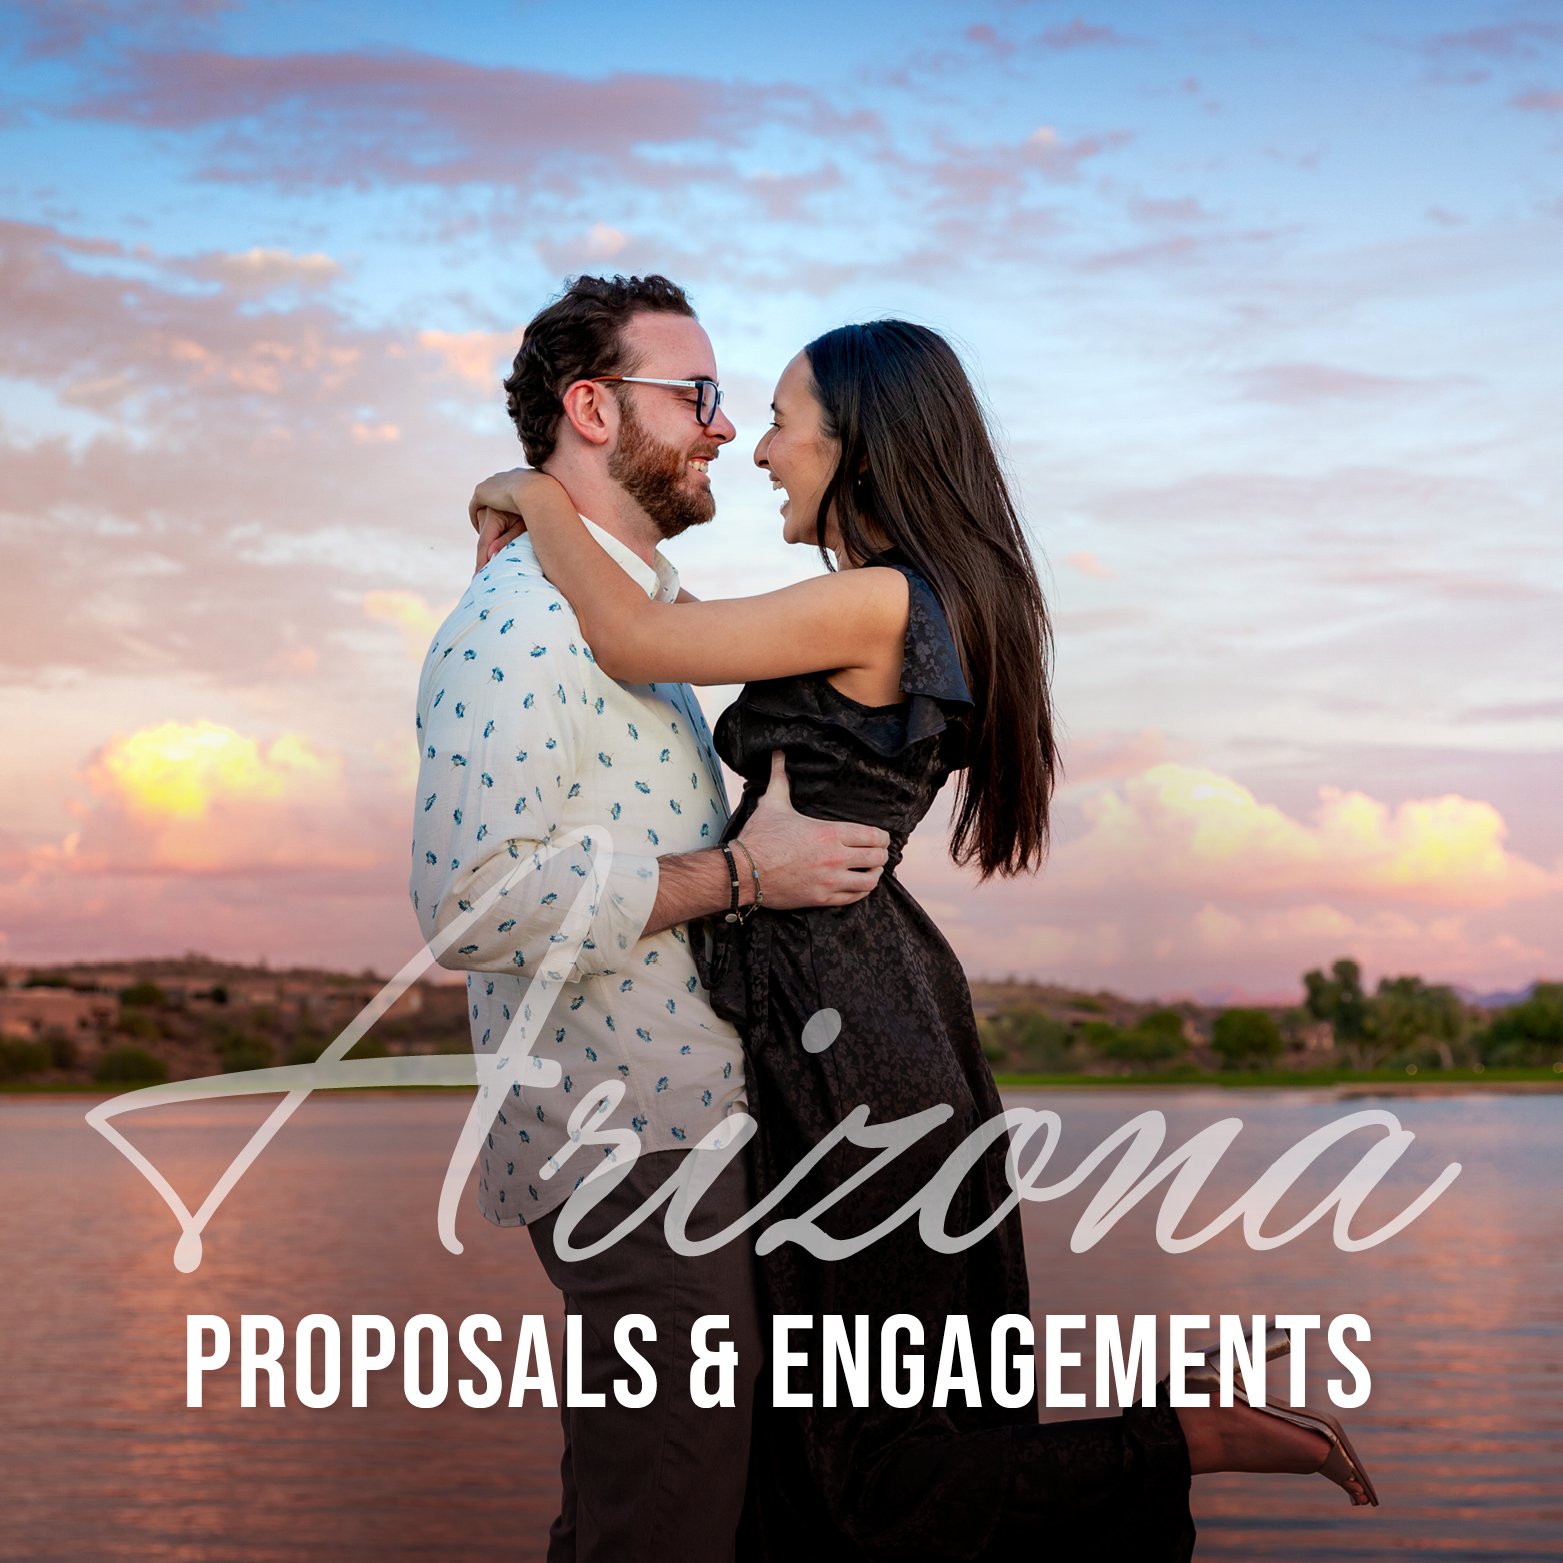 David-Orr-Photography_Arizona-Proposals-Engagements.jpg